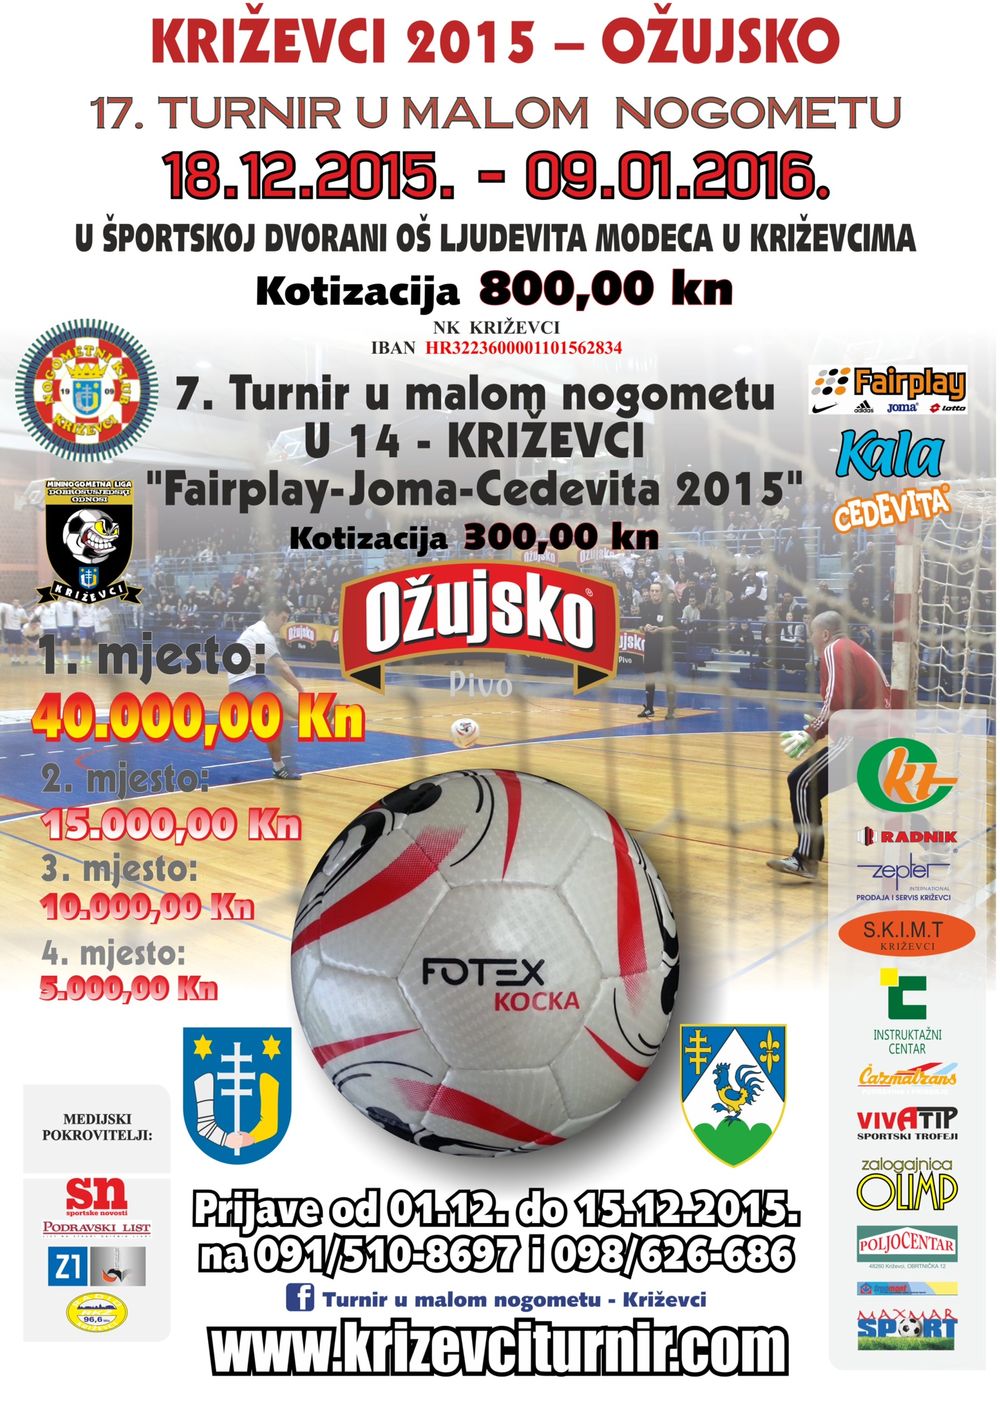 Najava - 17. turnir u Malom nogometu, Križevci 2015 - Ožujsko 